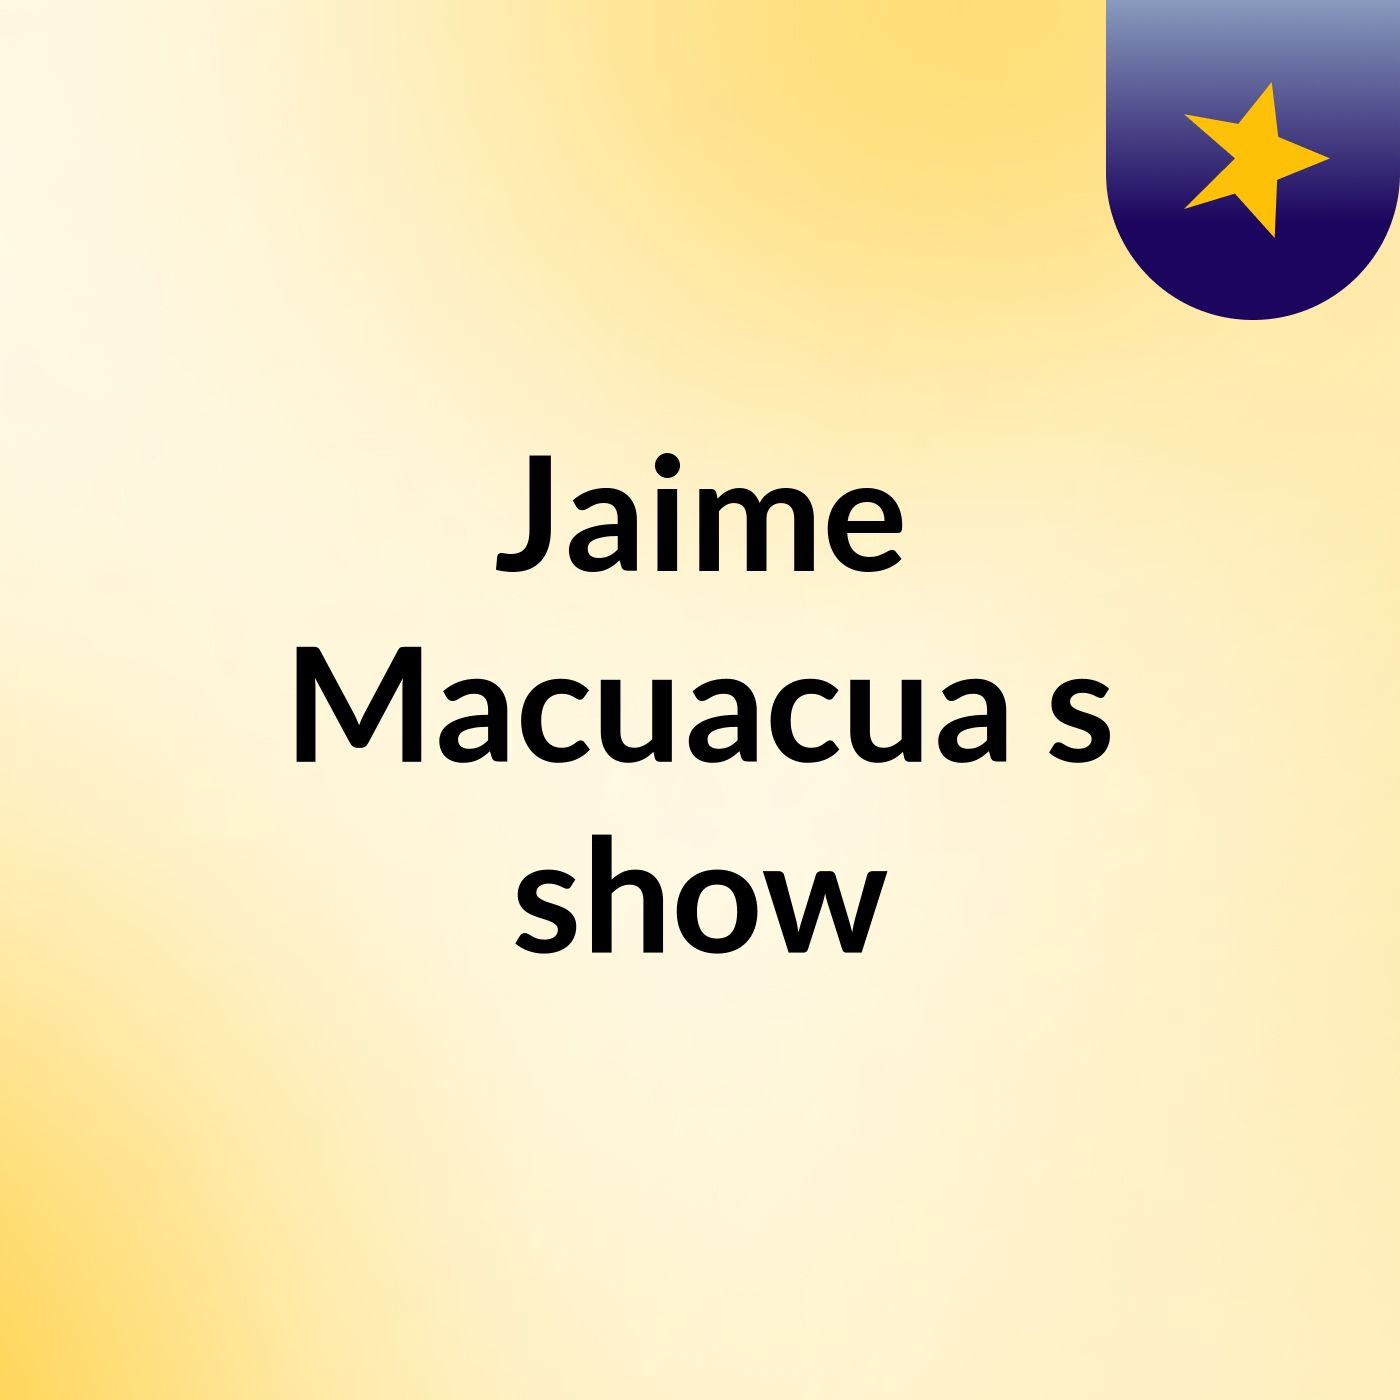 Jaime Macuacua's show